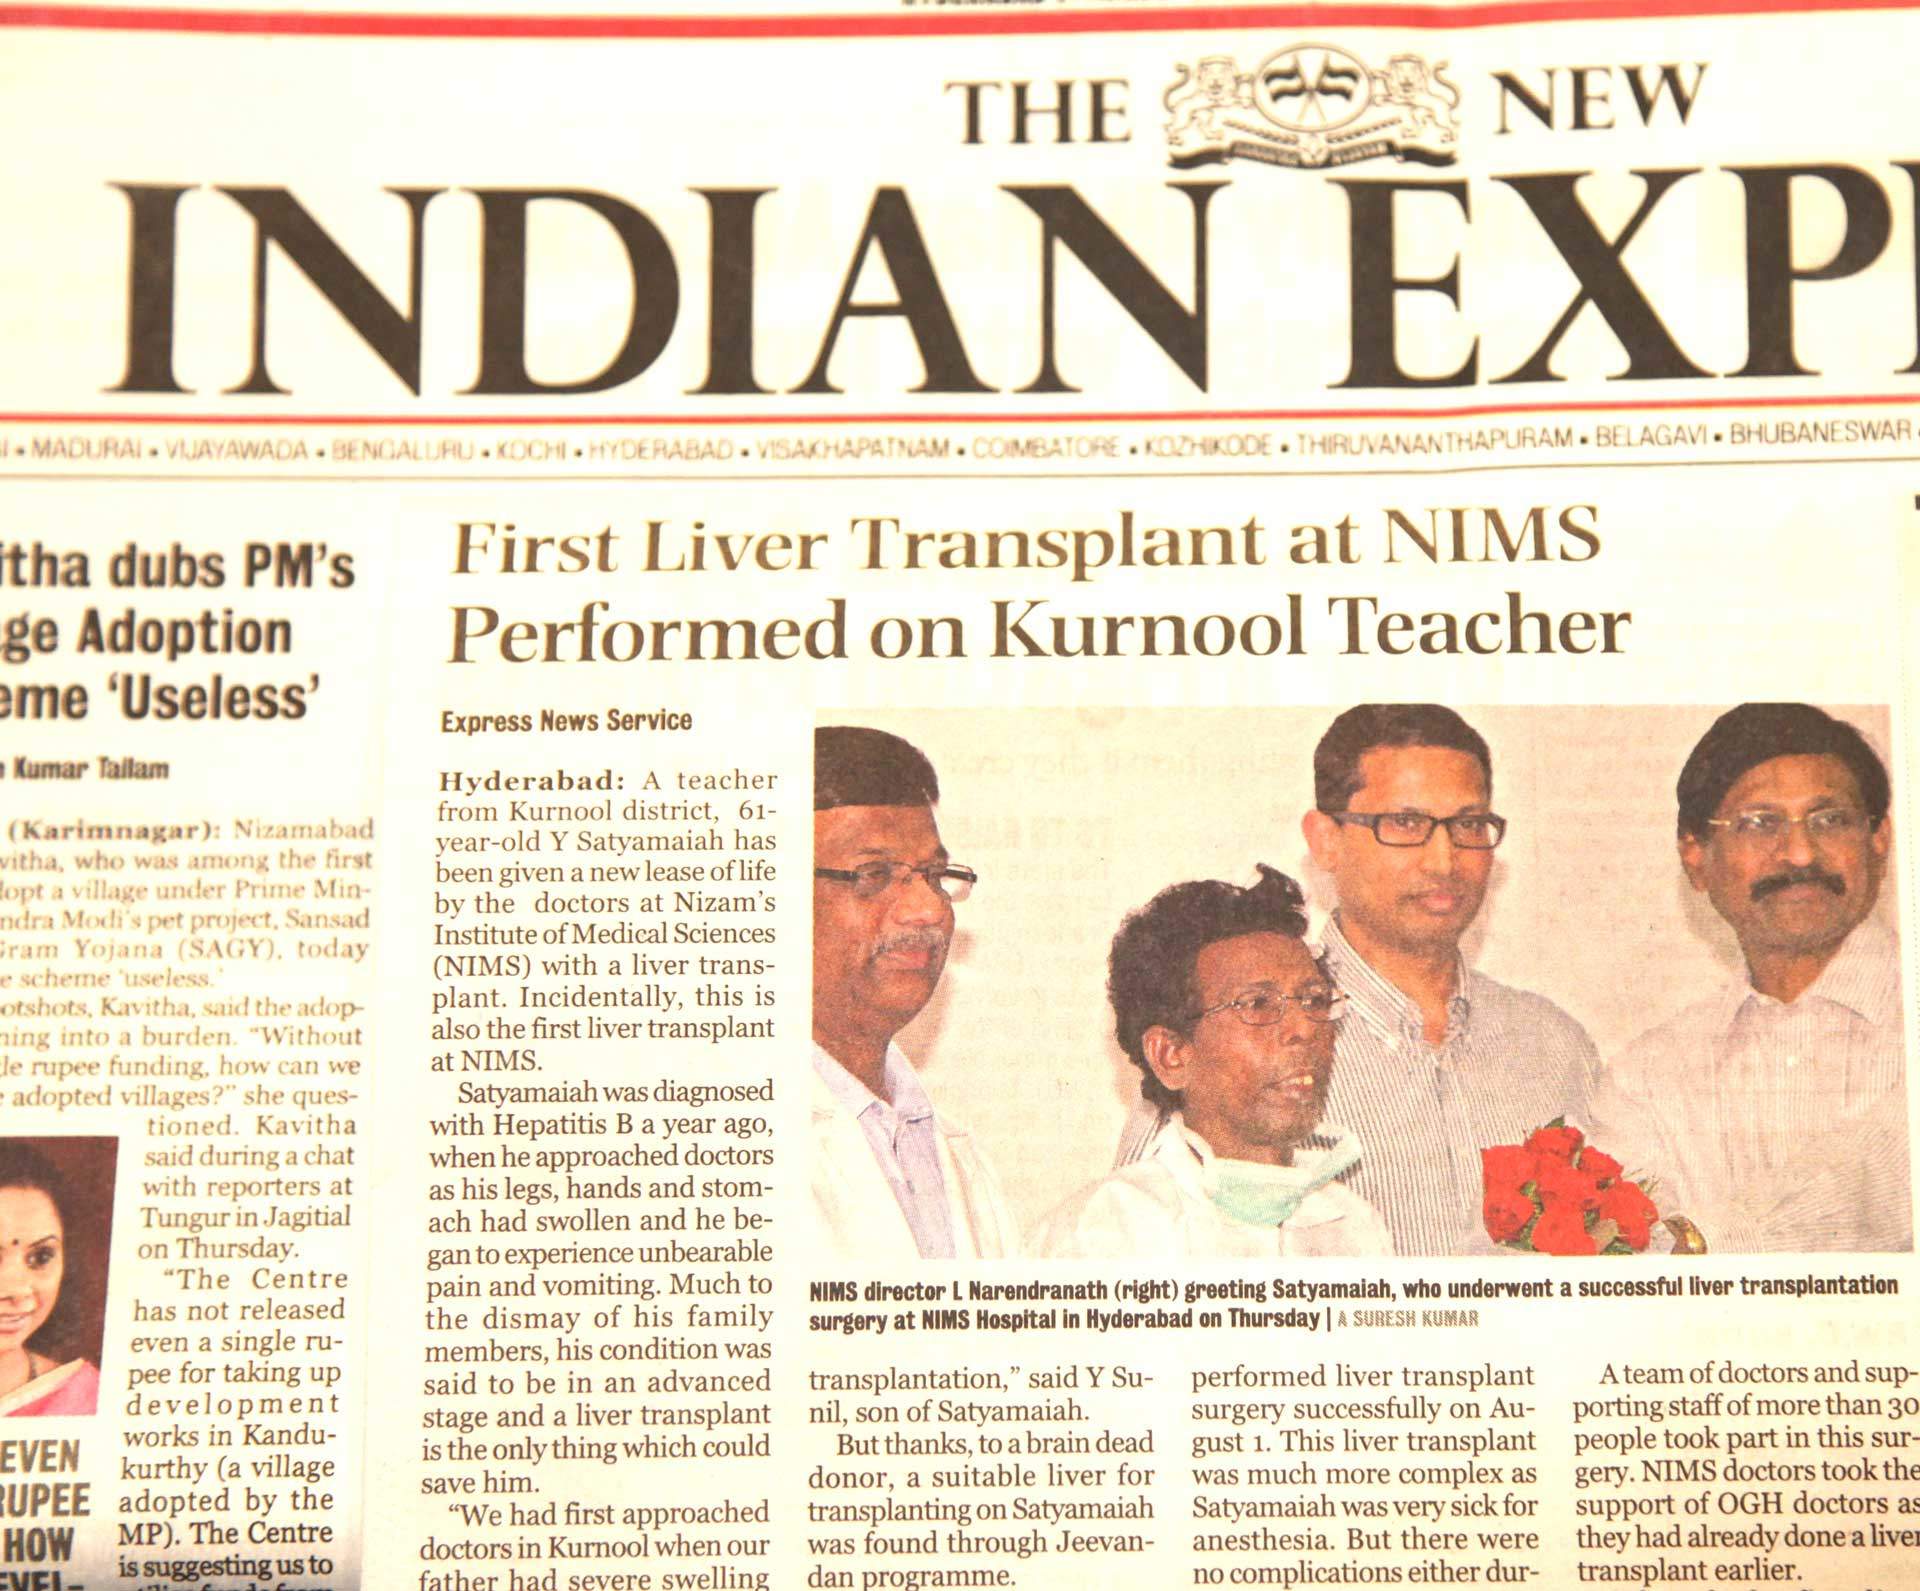 First Liver Transplant At NIMS Performed On Kurnool Teacher